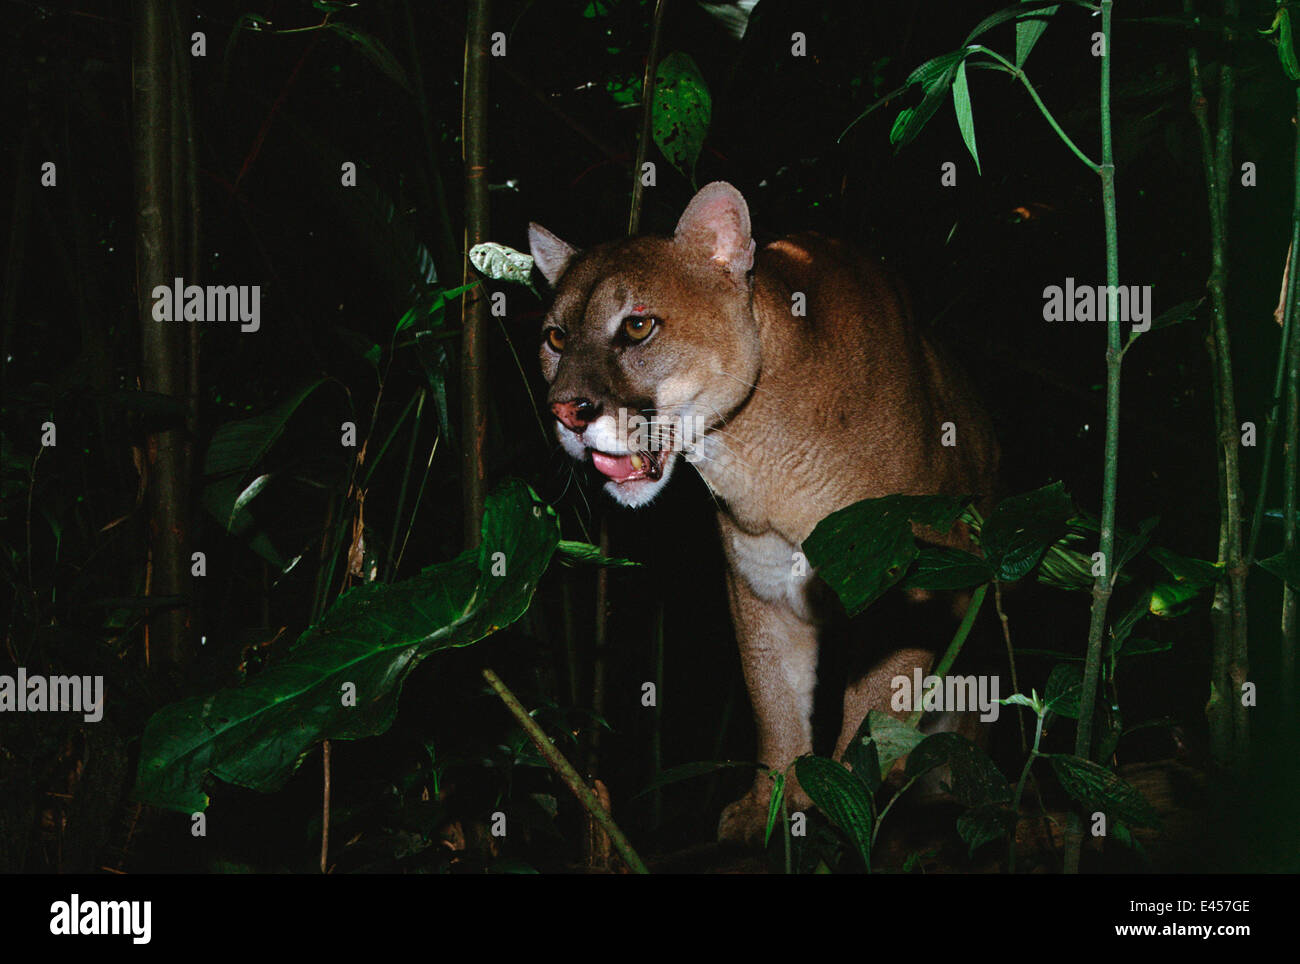 Puma Concolor Amazon Stockfotos und -bilder Kaufen - Alamy